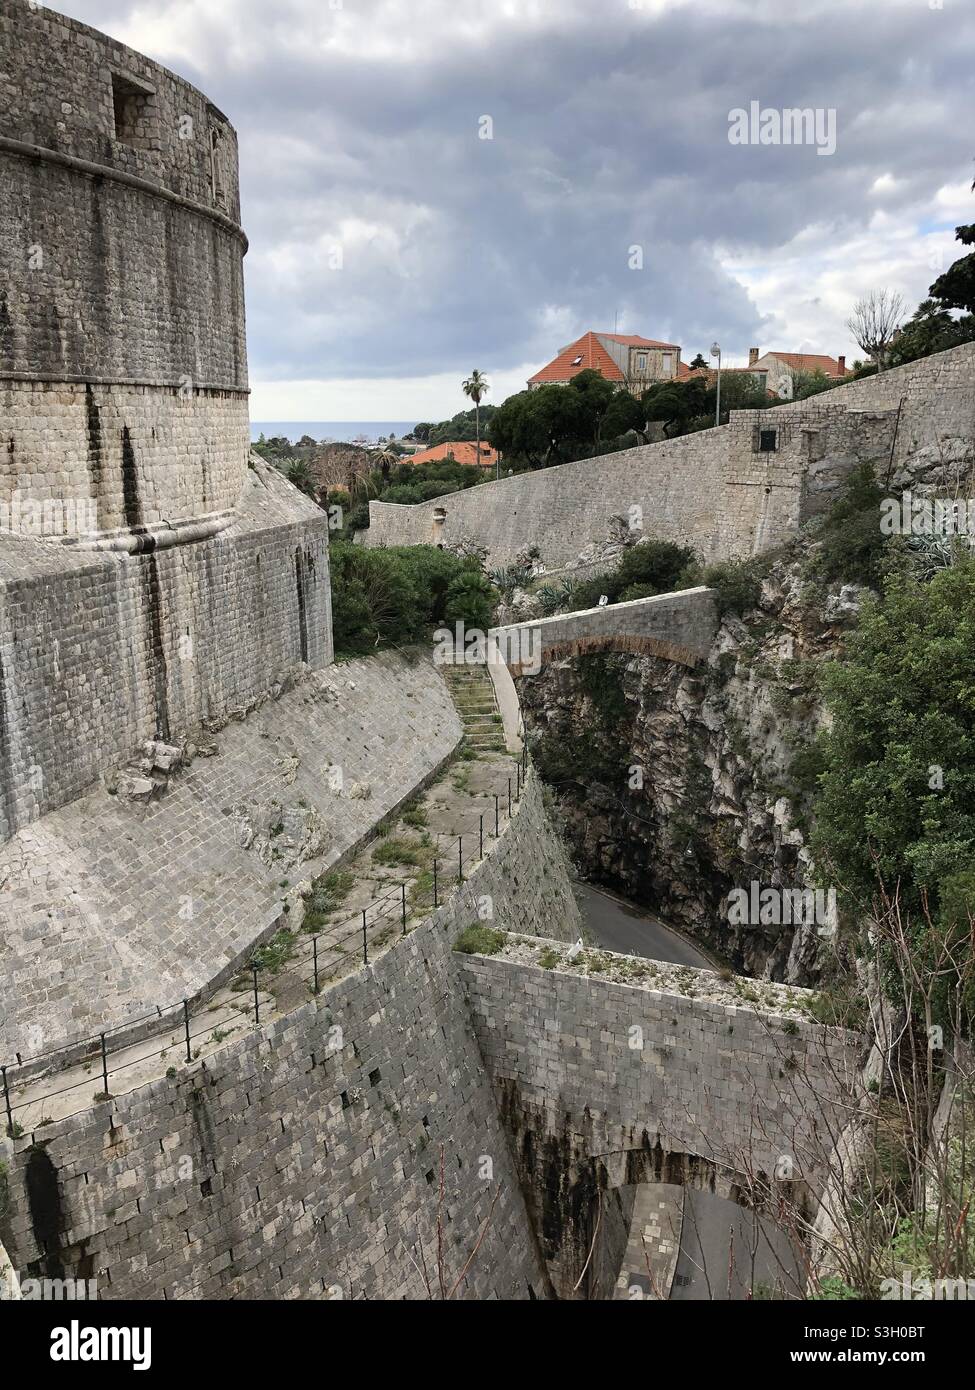 Sightseeing moment captured in Beautiful Dubrovnik.   Europe natural beautifulness. Stock Photo